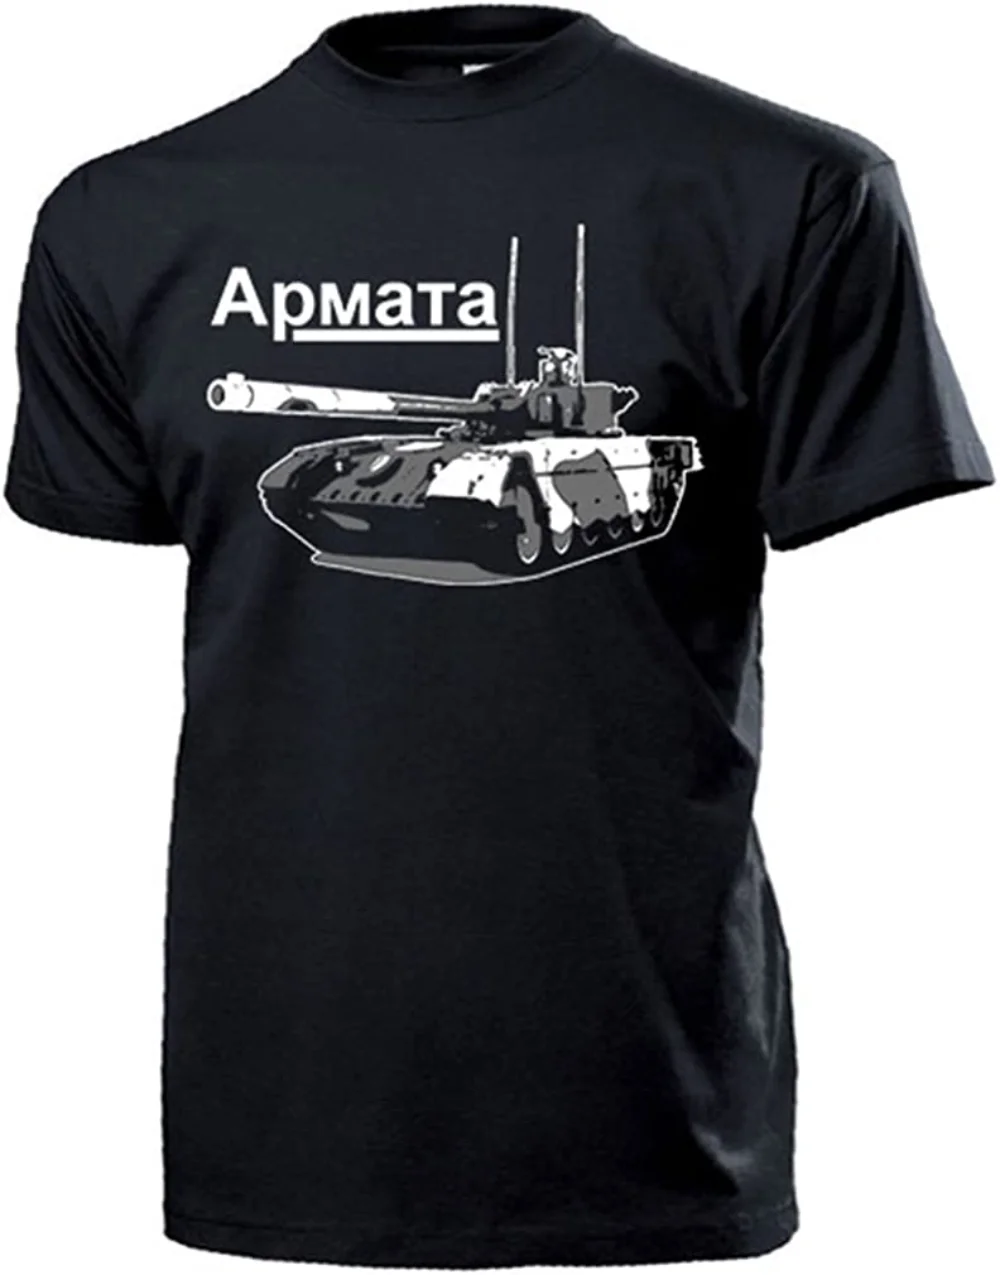 

Russian T-14 Armata Main Battle Tank T-Shirt 100% Cotton O-Neck Summer Short Sleeve Casual Mens T-shirt Size S-3XL